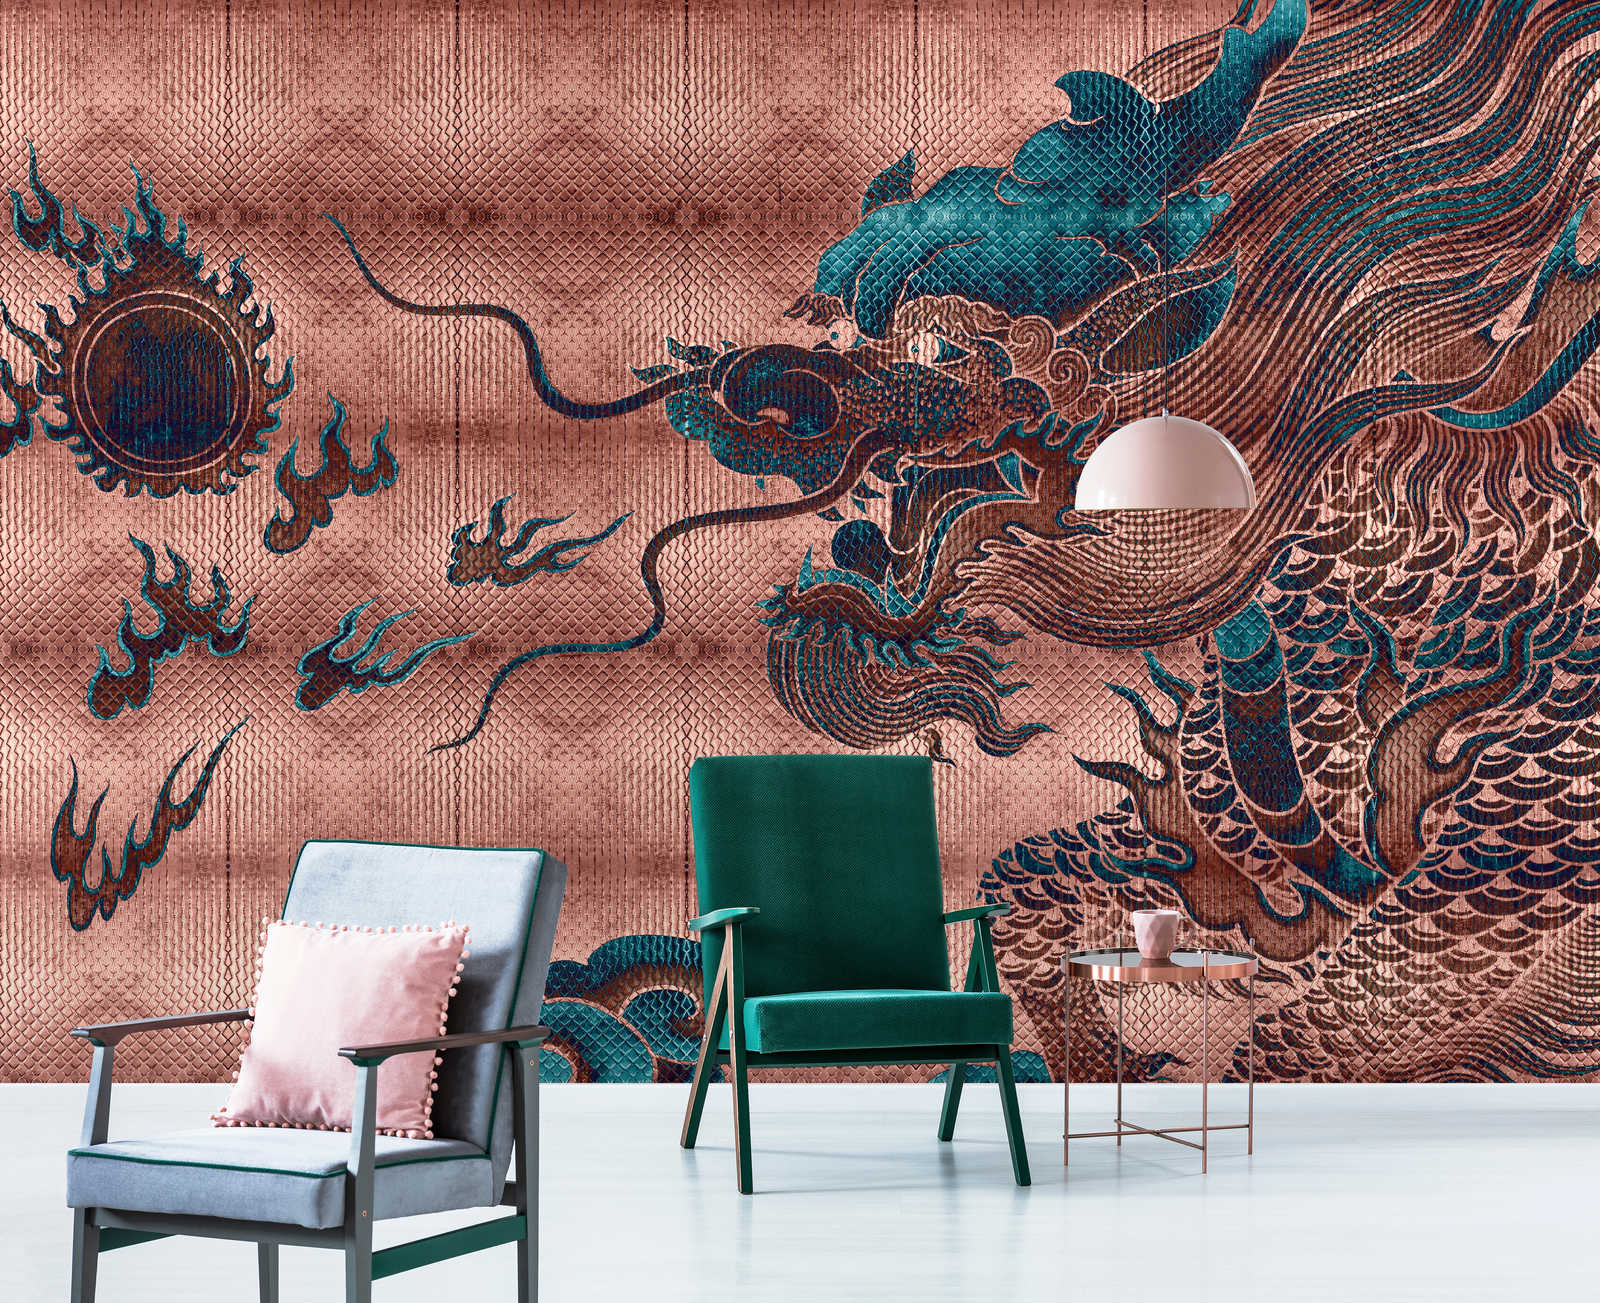             Shenzen 1 - wall mural dragon Asian Syle with metallic colours
        